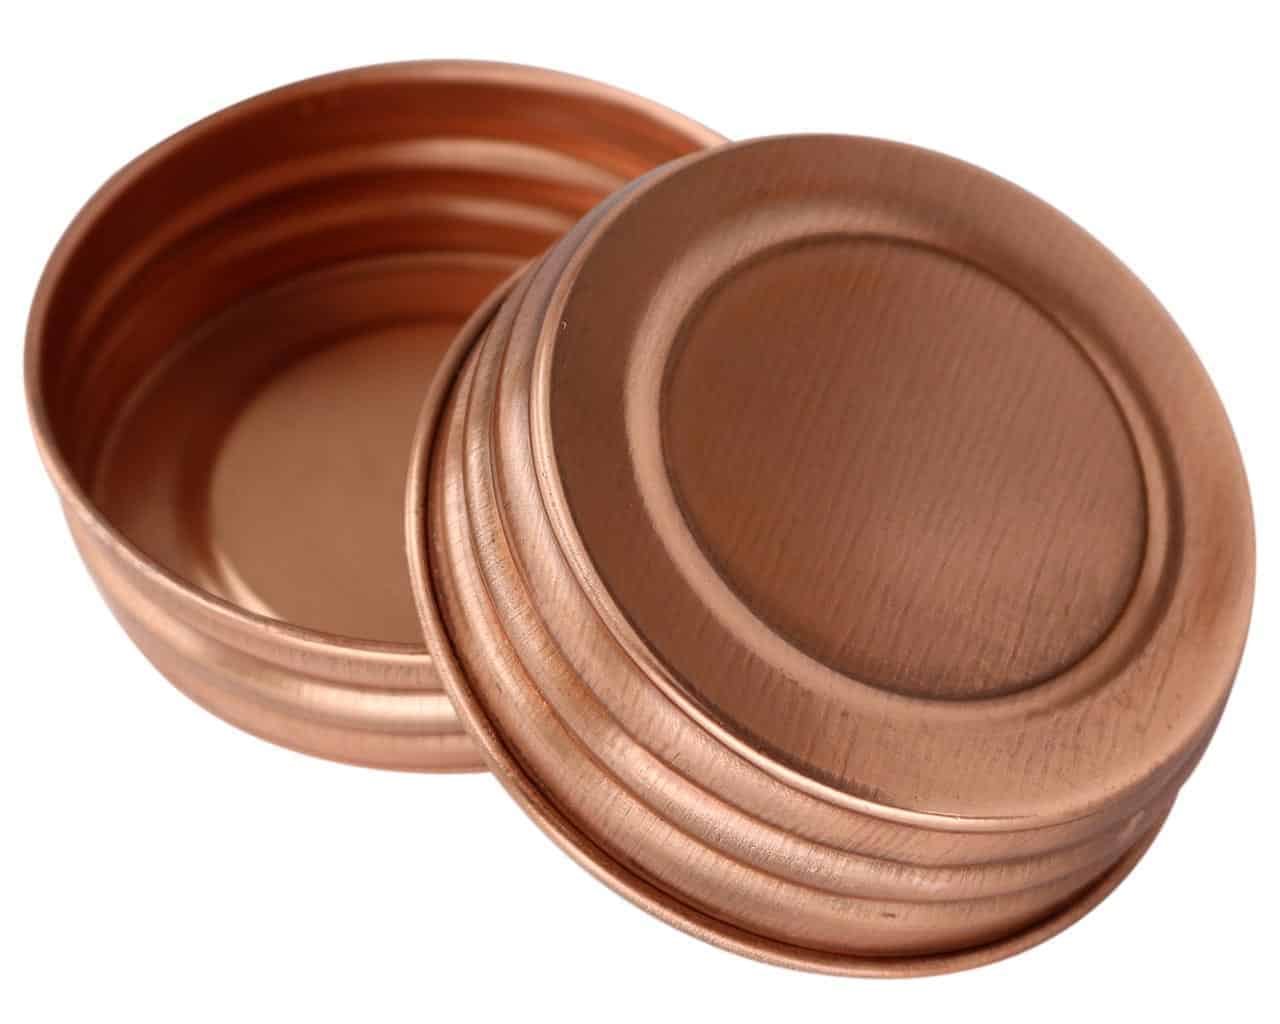 Shiny Copper Decorative Mason Jar Lids 4 Pack